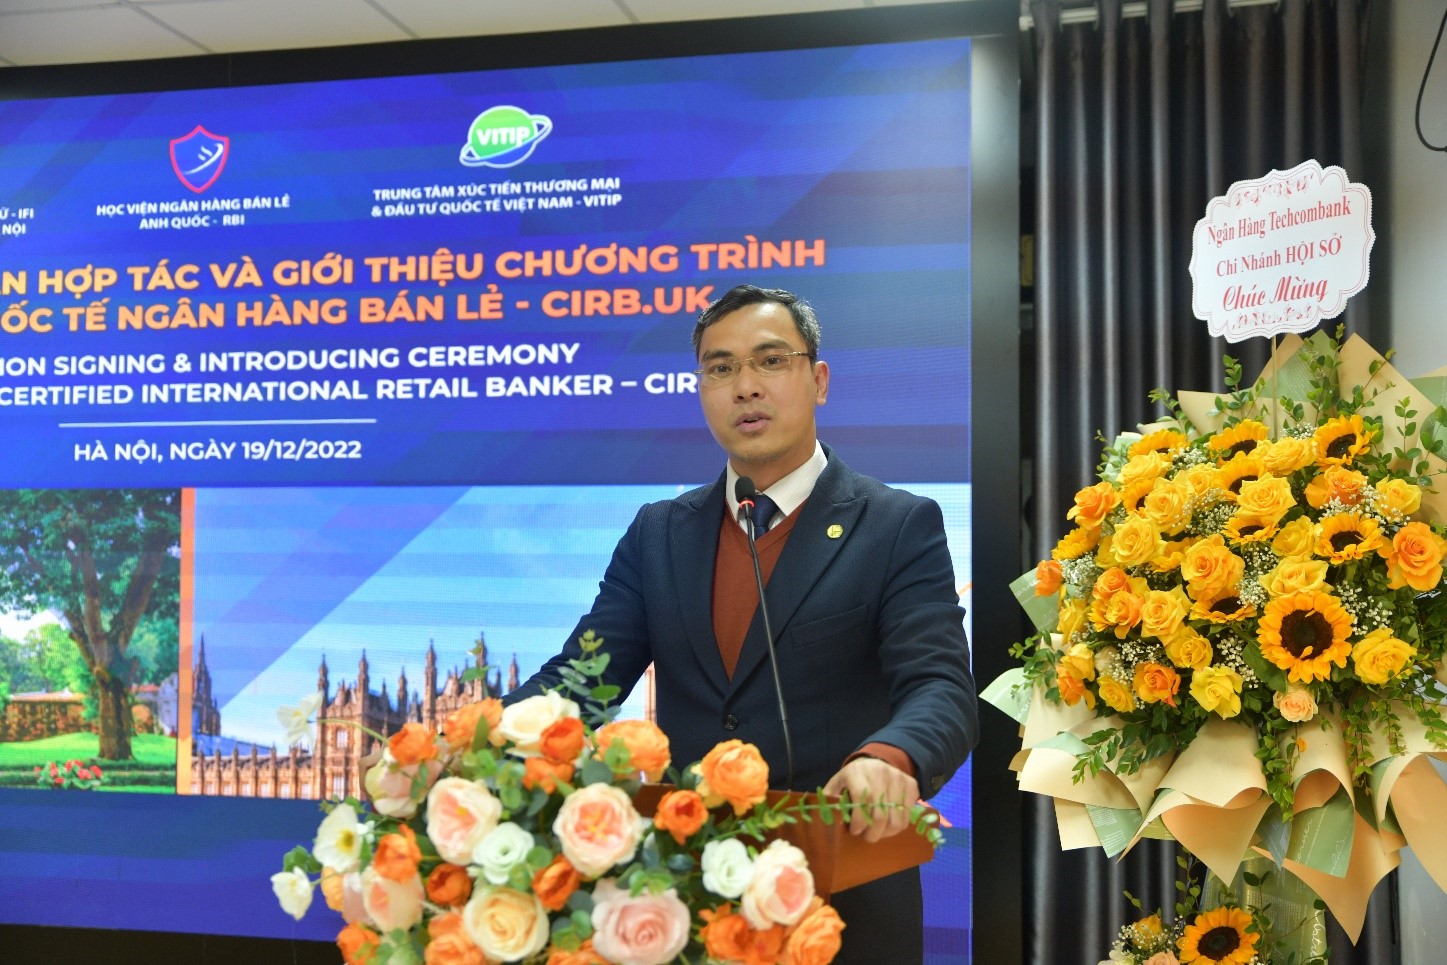 ​Mr. Phùng Danh Thắng, Vice President of IFI